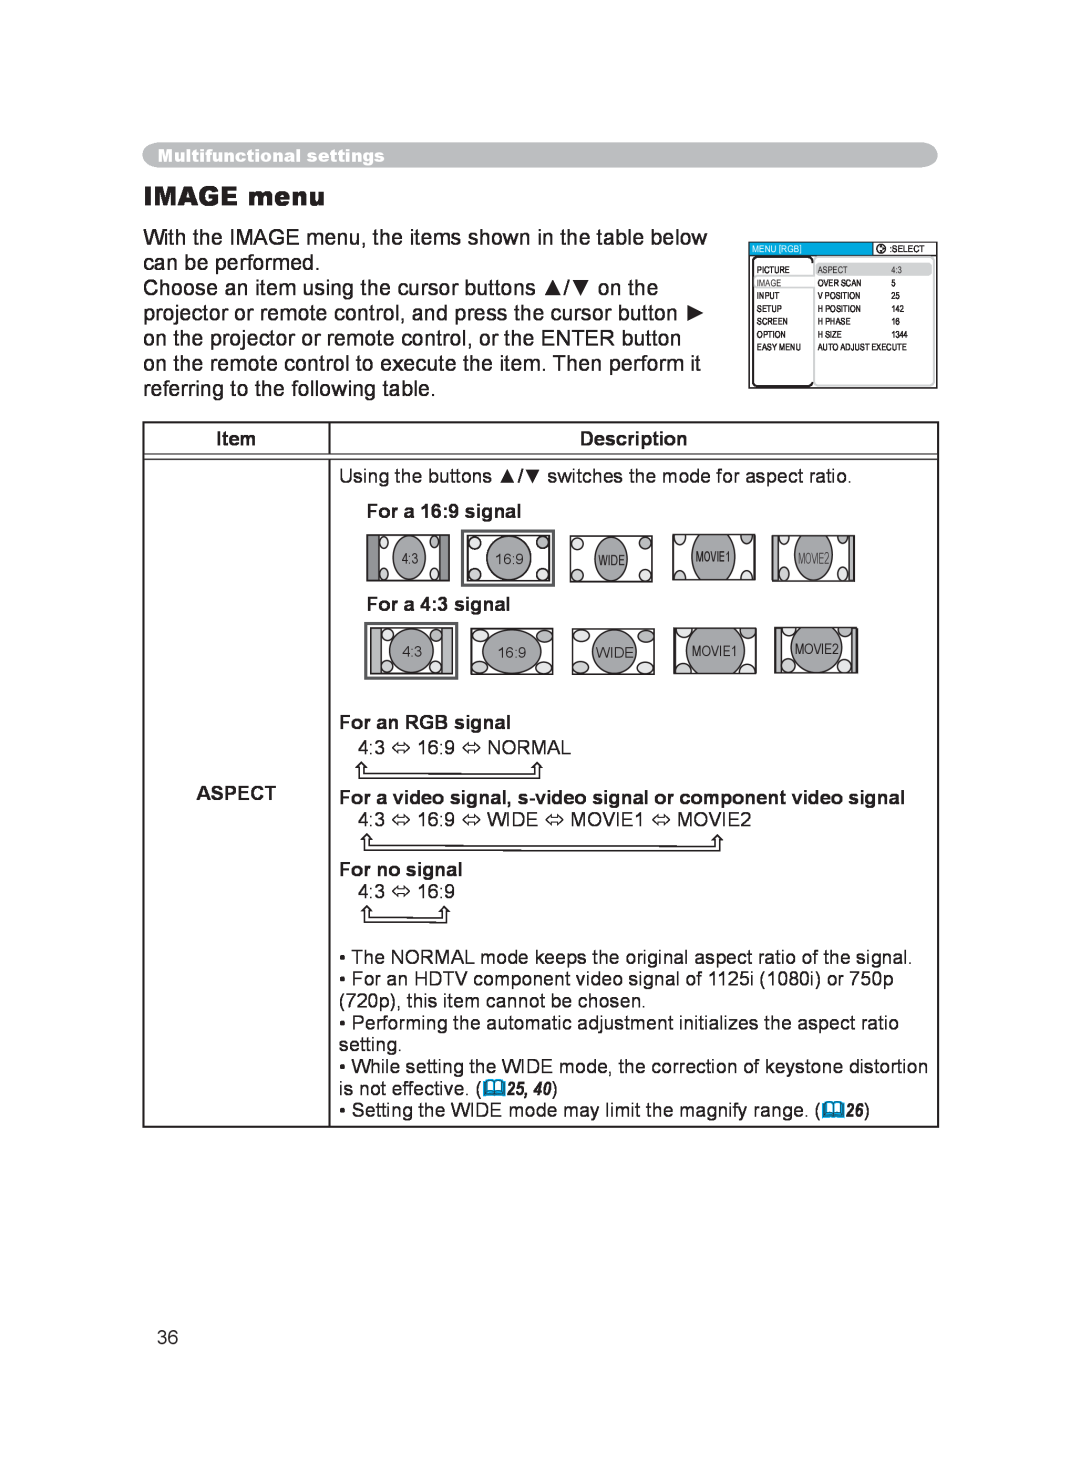 Hitachi PJ-LC9 user manual IMAGE menu, Description, Aspect, For a 16 9 signal, For a 4 3 signal, For an RGB signal 